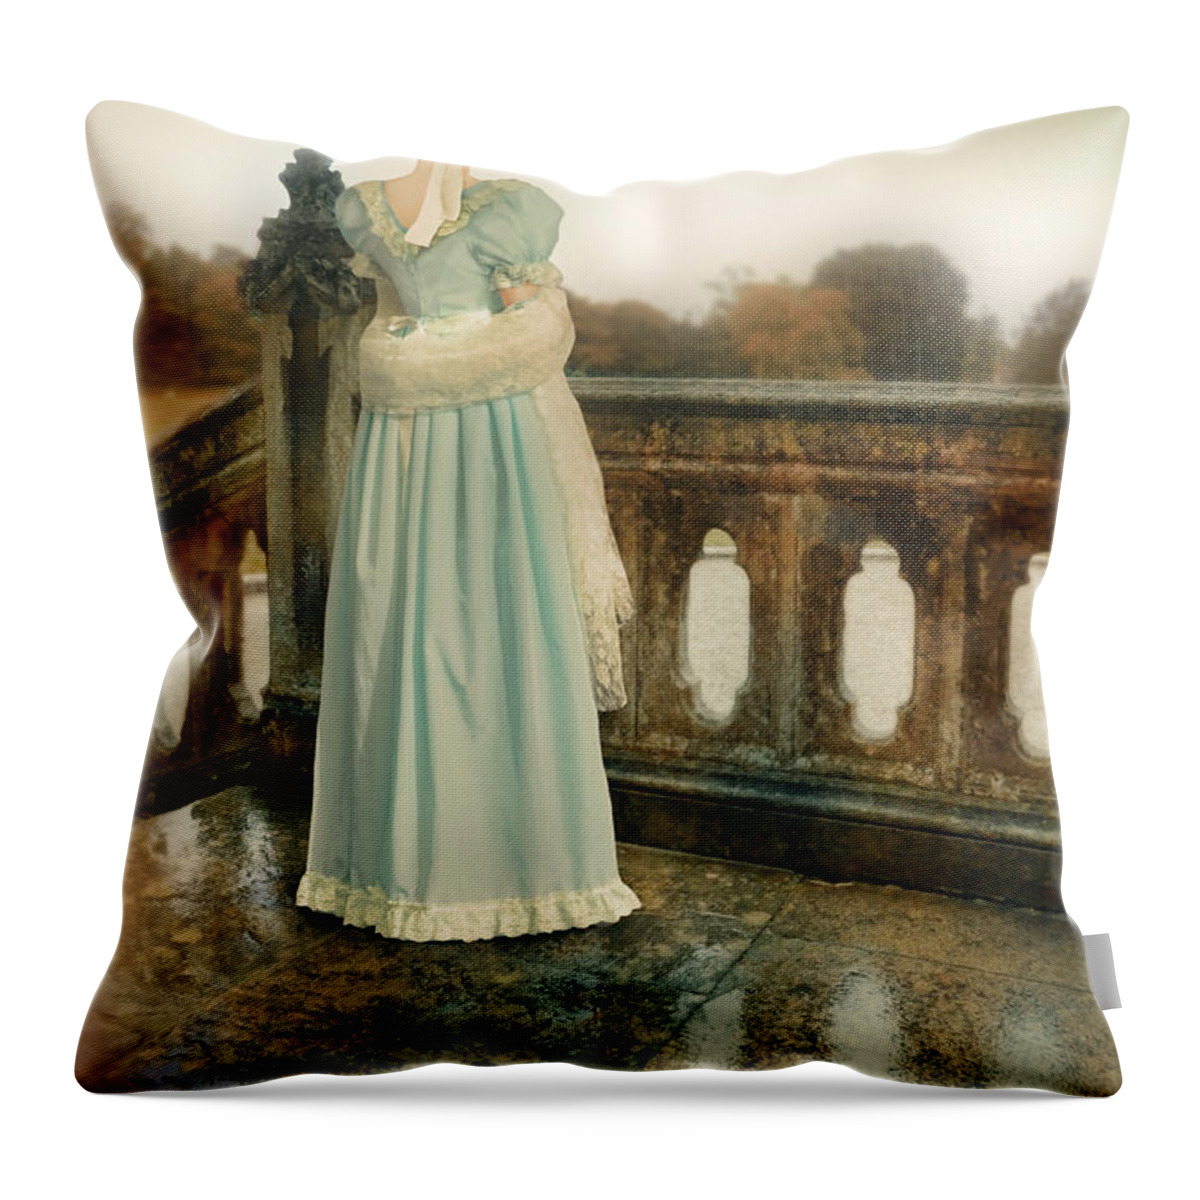 Woman Throw Pillow featuring the photograph Lady on a Veranda by Jill Battaglia